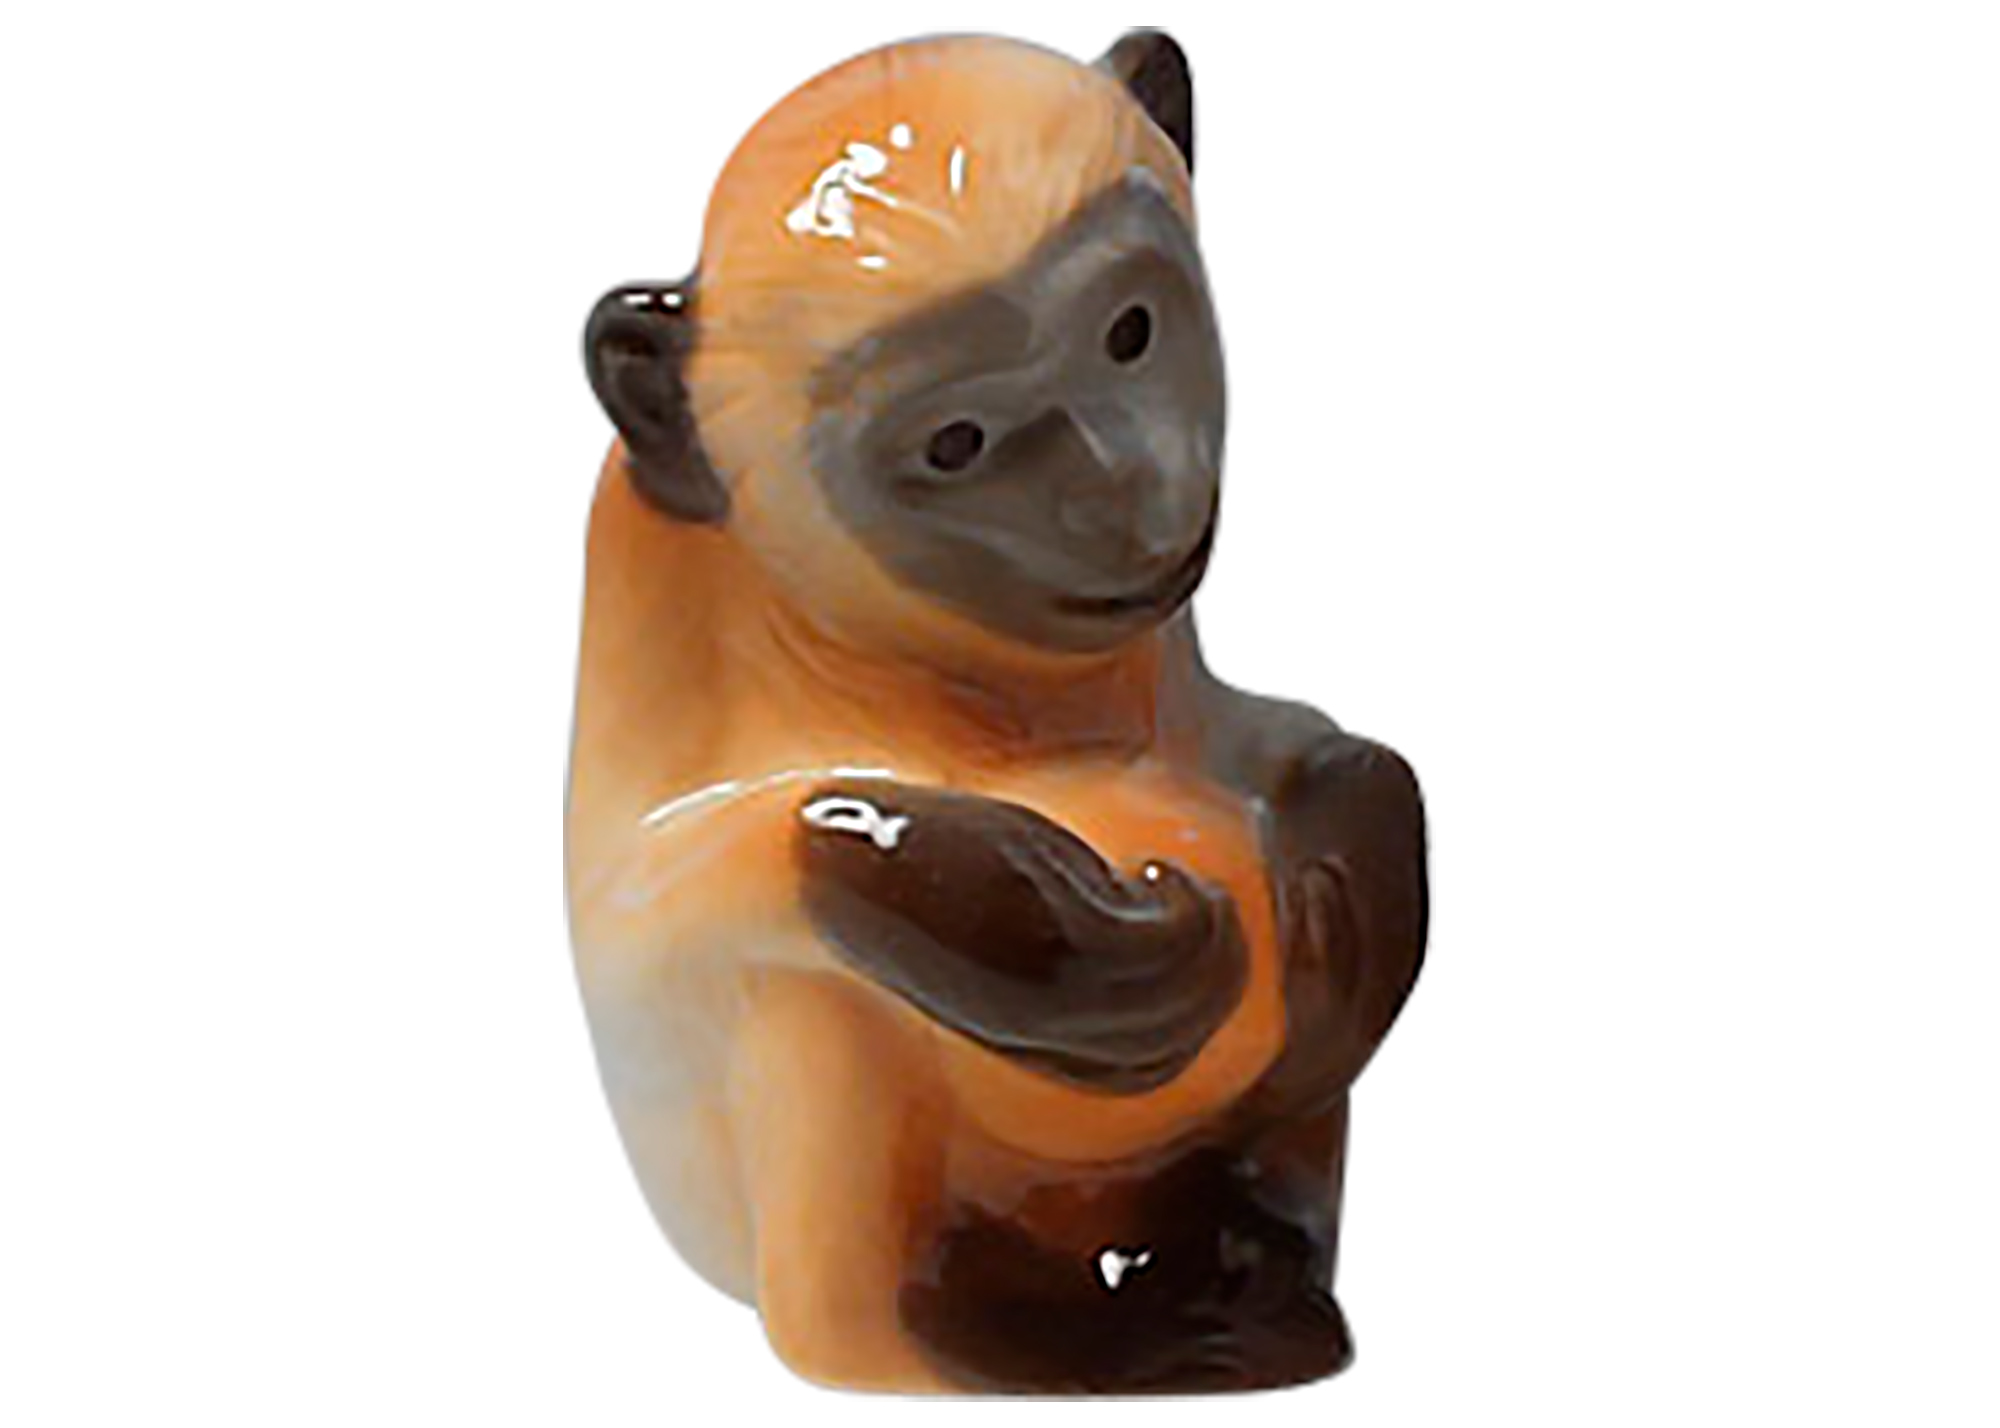 Buy Monkey With Ball Figurine at GoldenCockerel.com